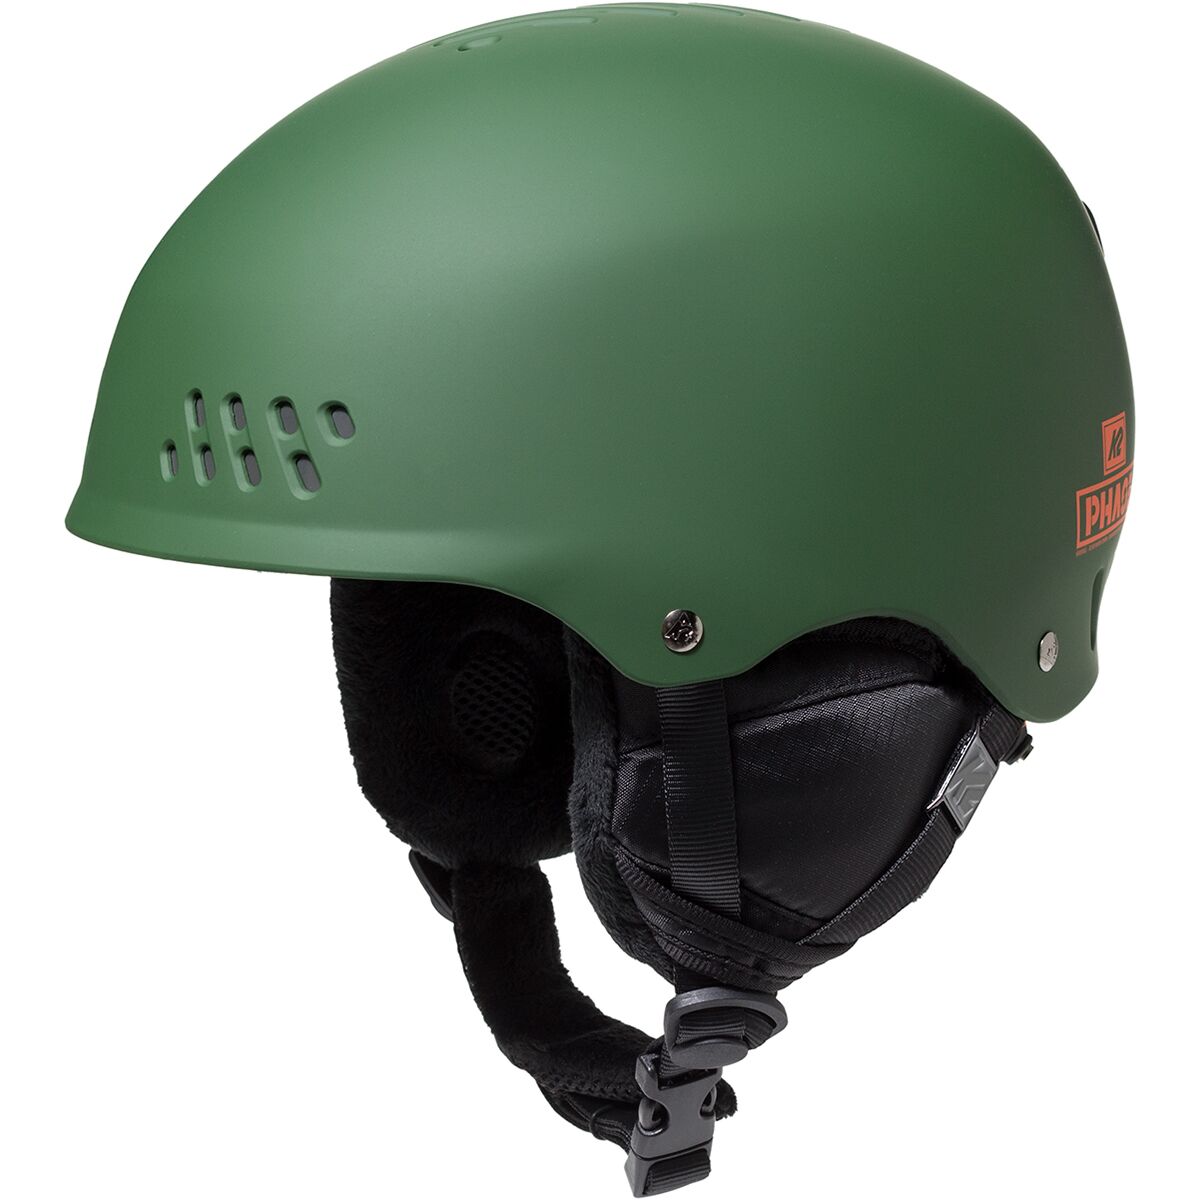 K2 Phase Pro Helmet